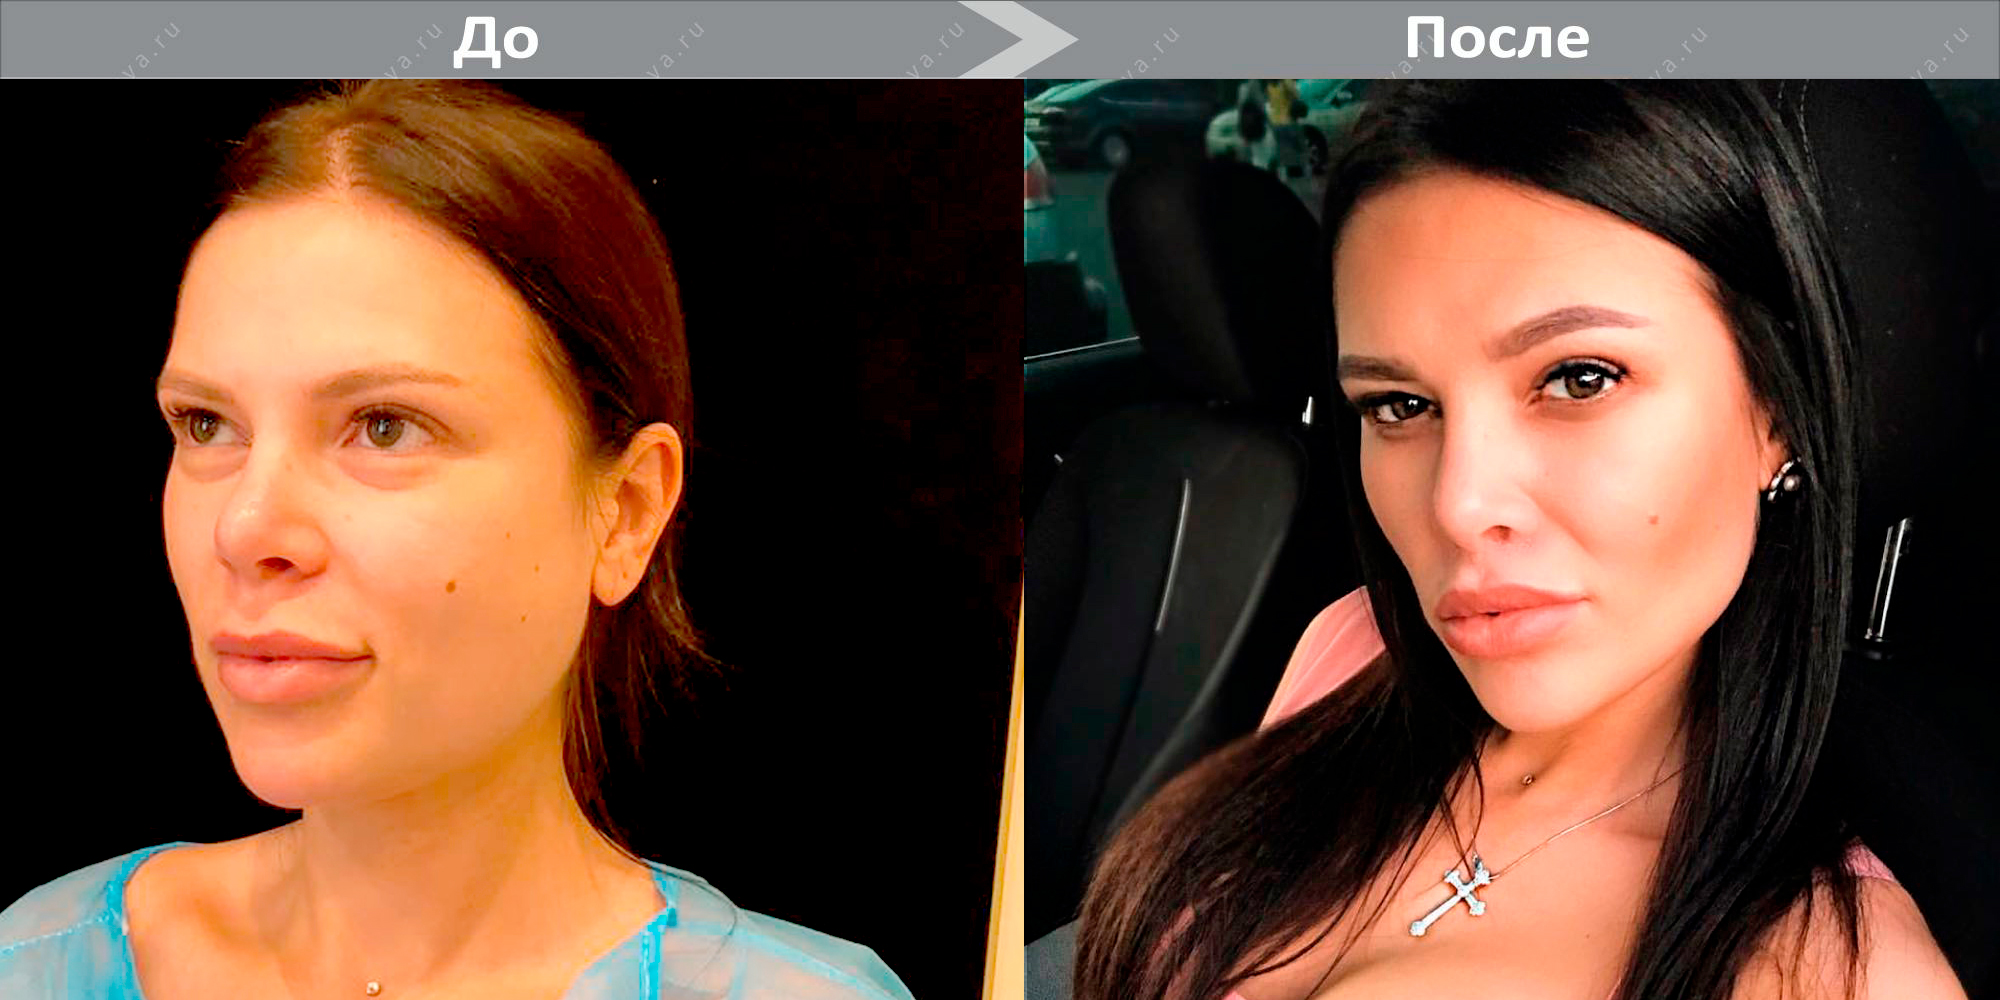 элина дагаева фото до и после операции